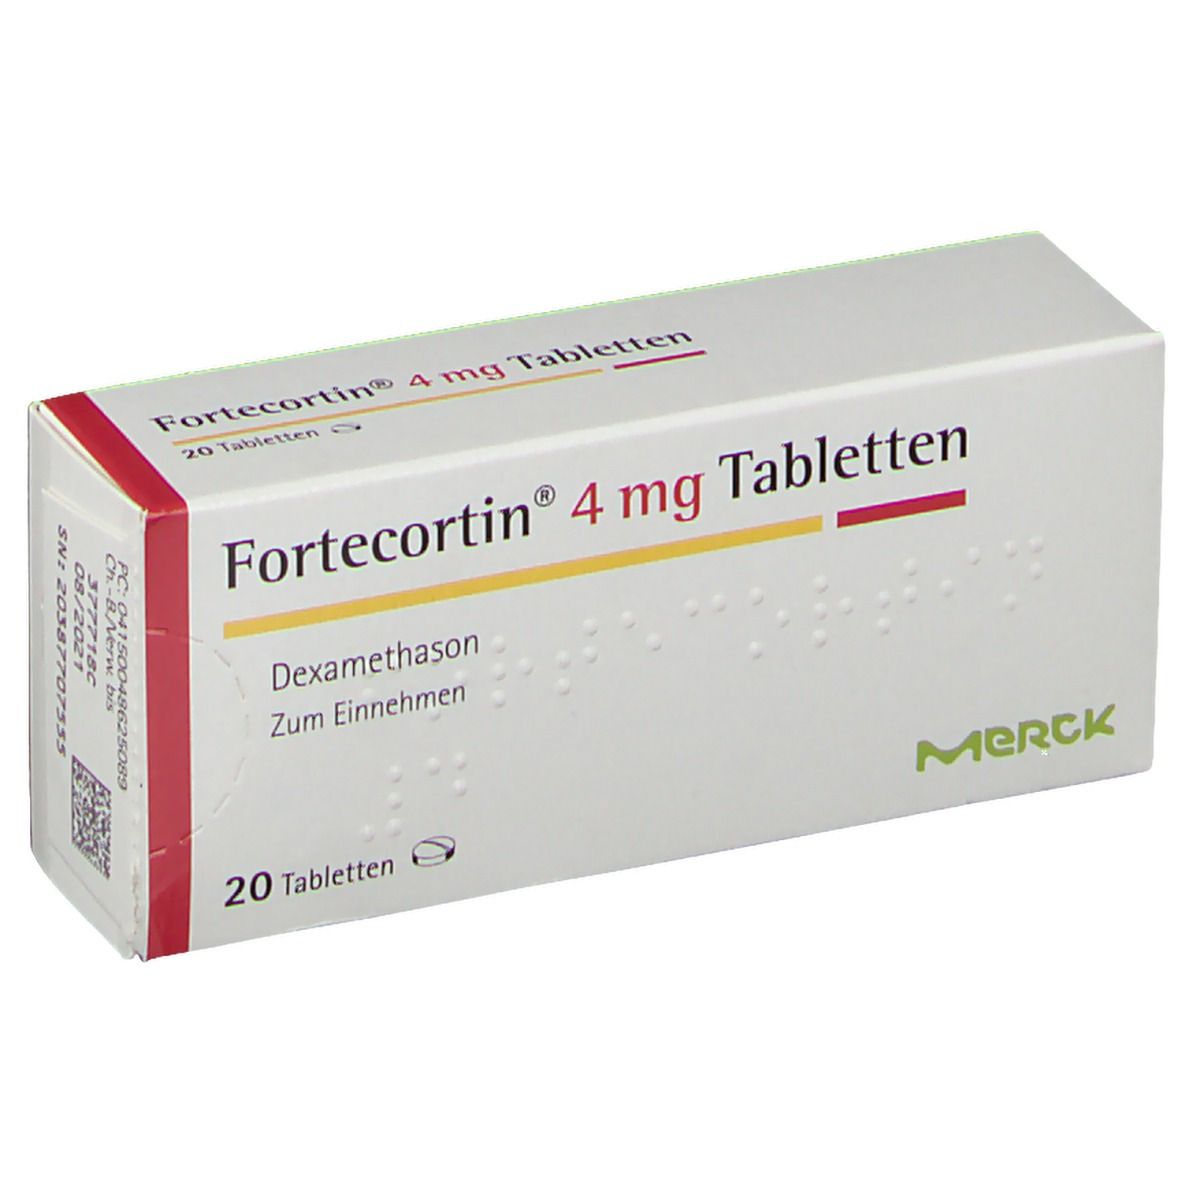 Fortecortin® 4 mg